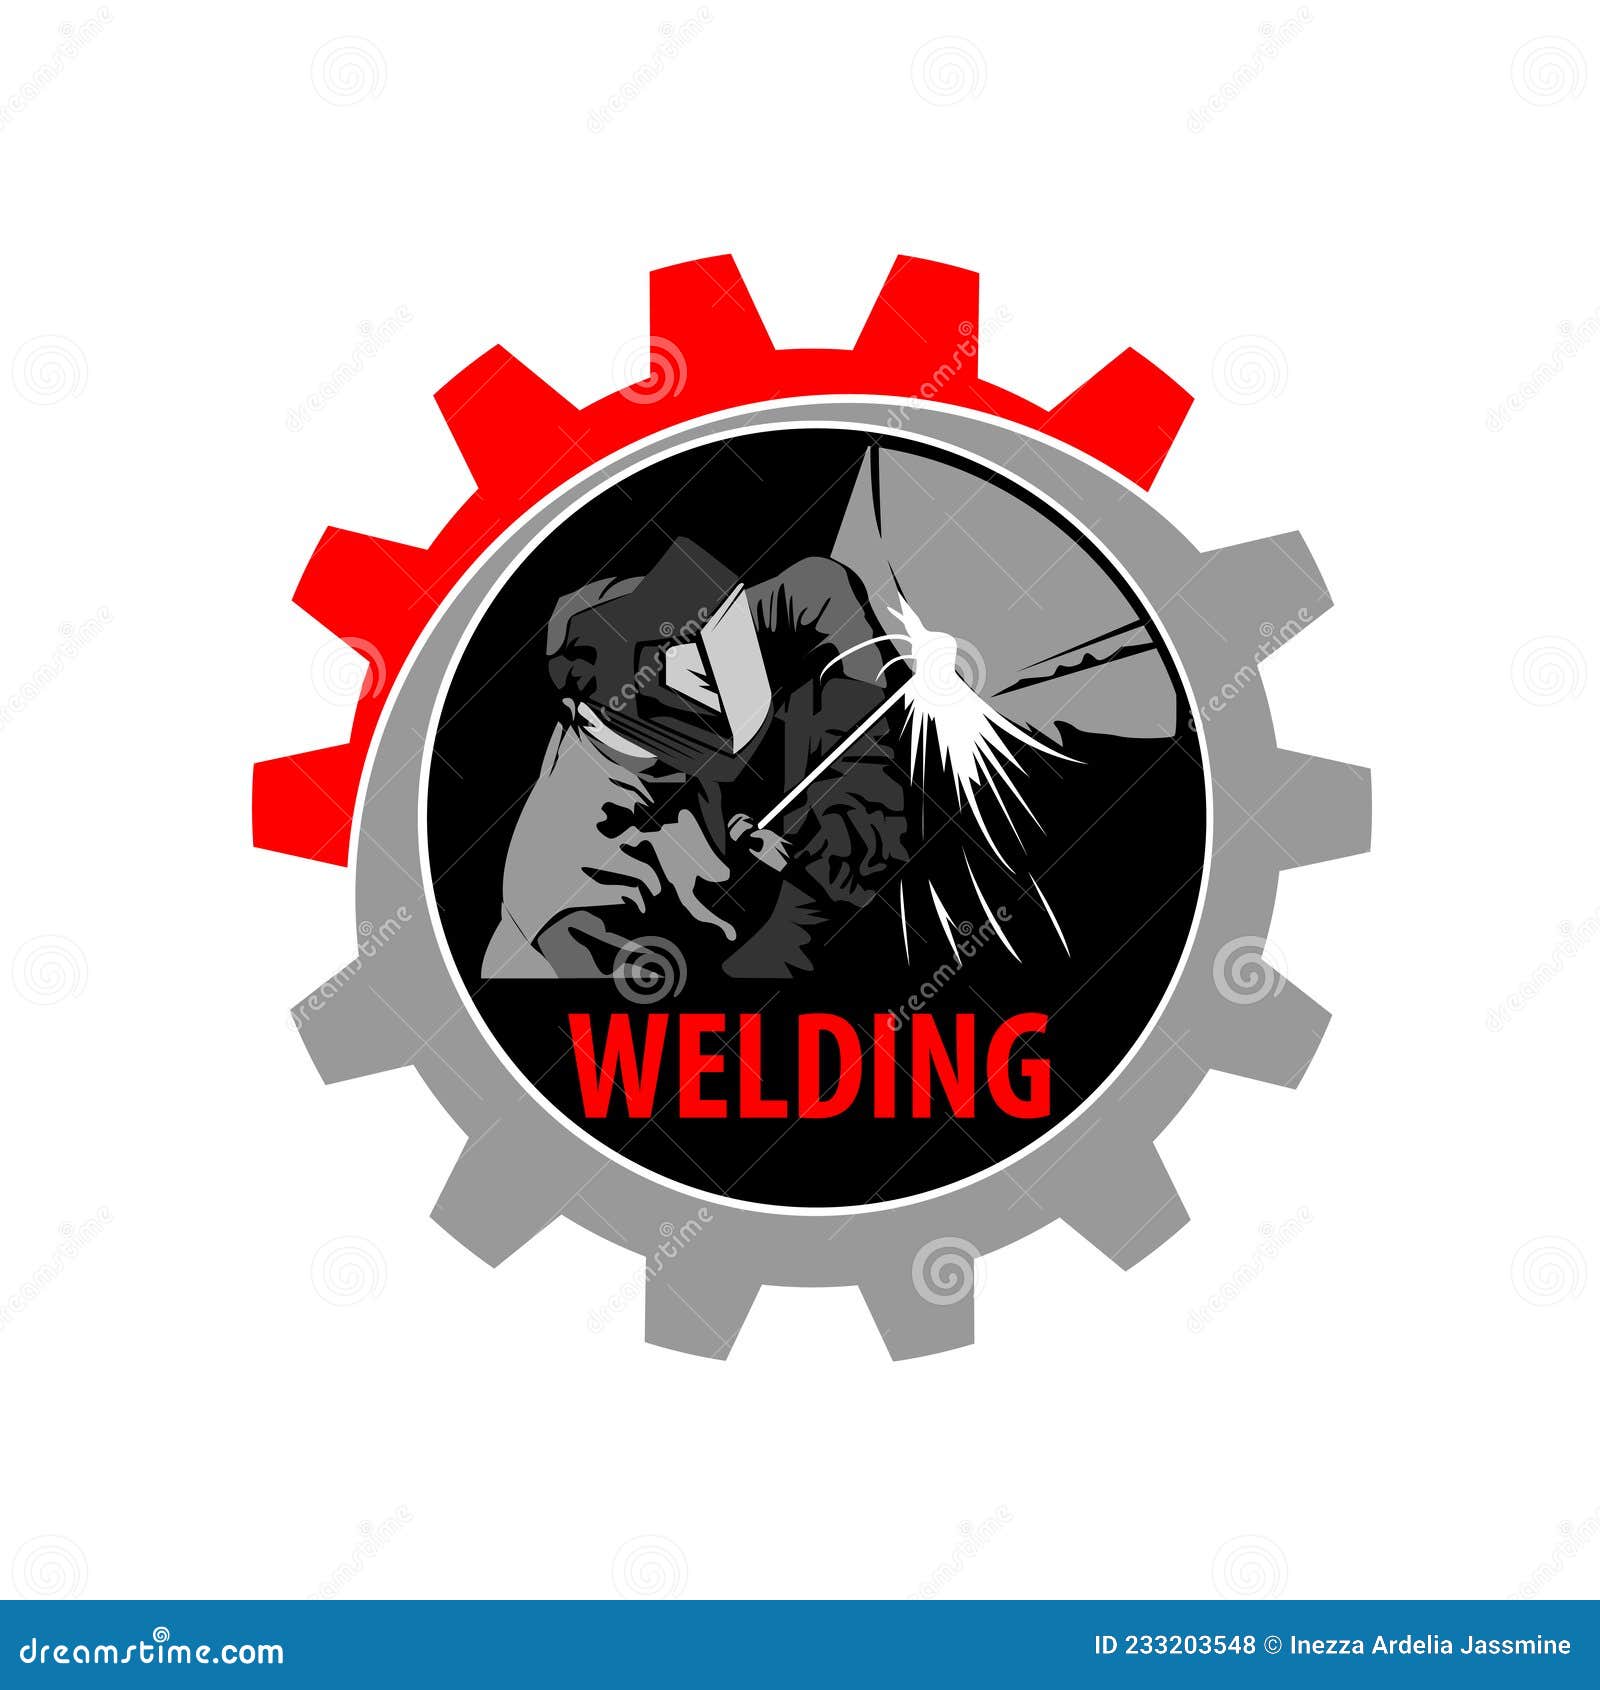 Illustration Vector Graphic of Welding Logo Stock Vector - Illustration ...